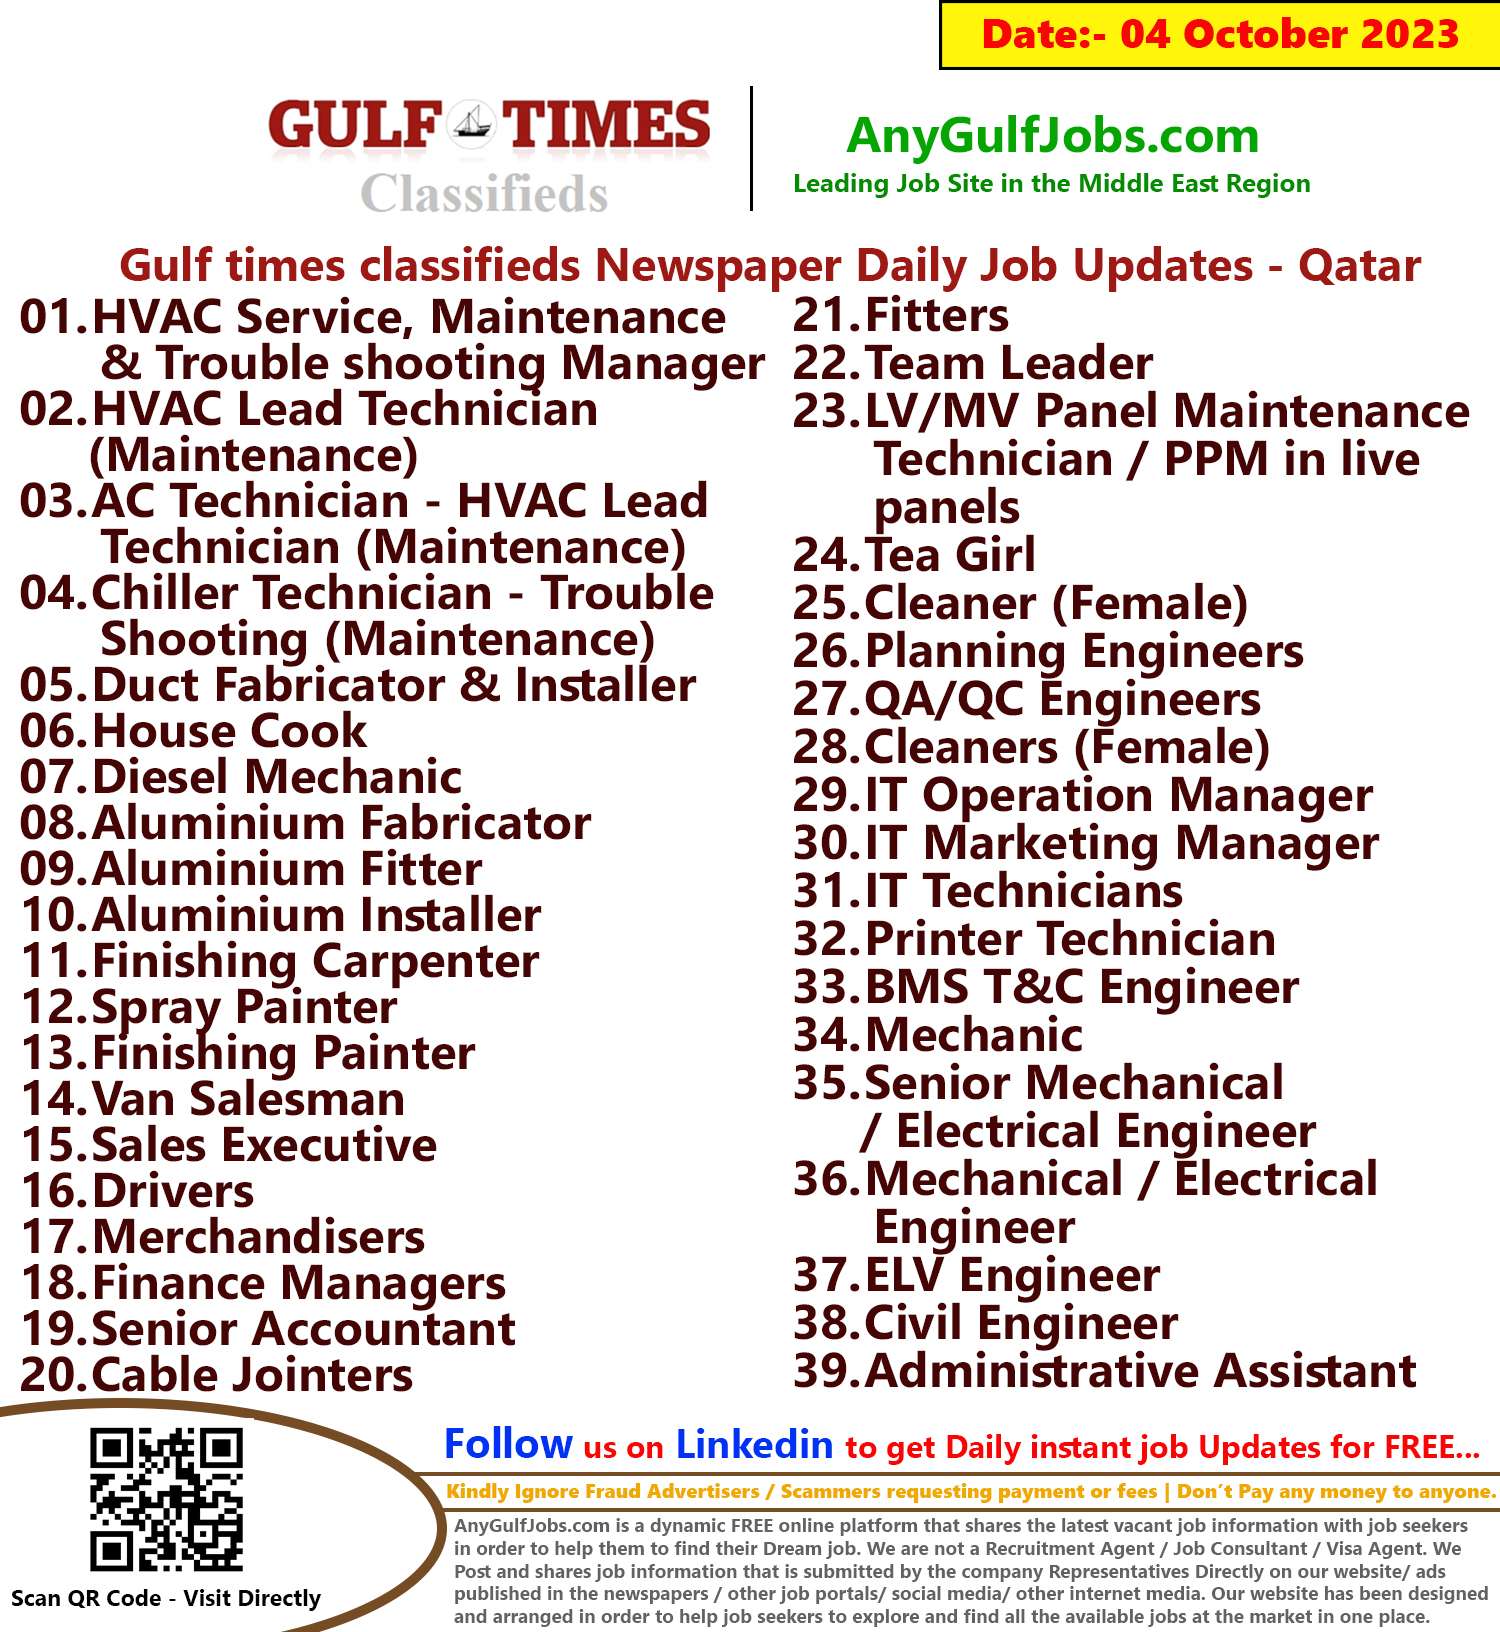 Gulf times classifieds Job Vacancies Qatar - 04 October 2023